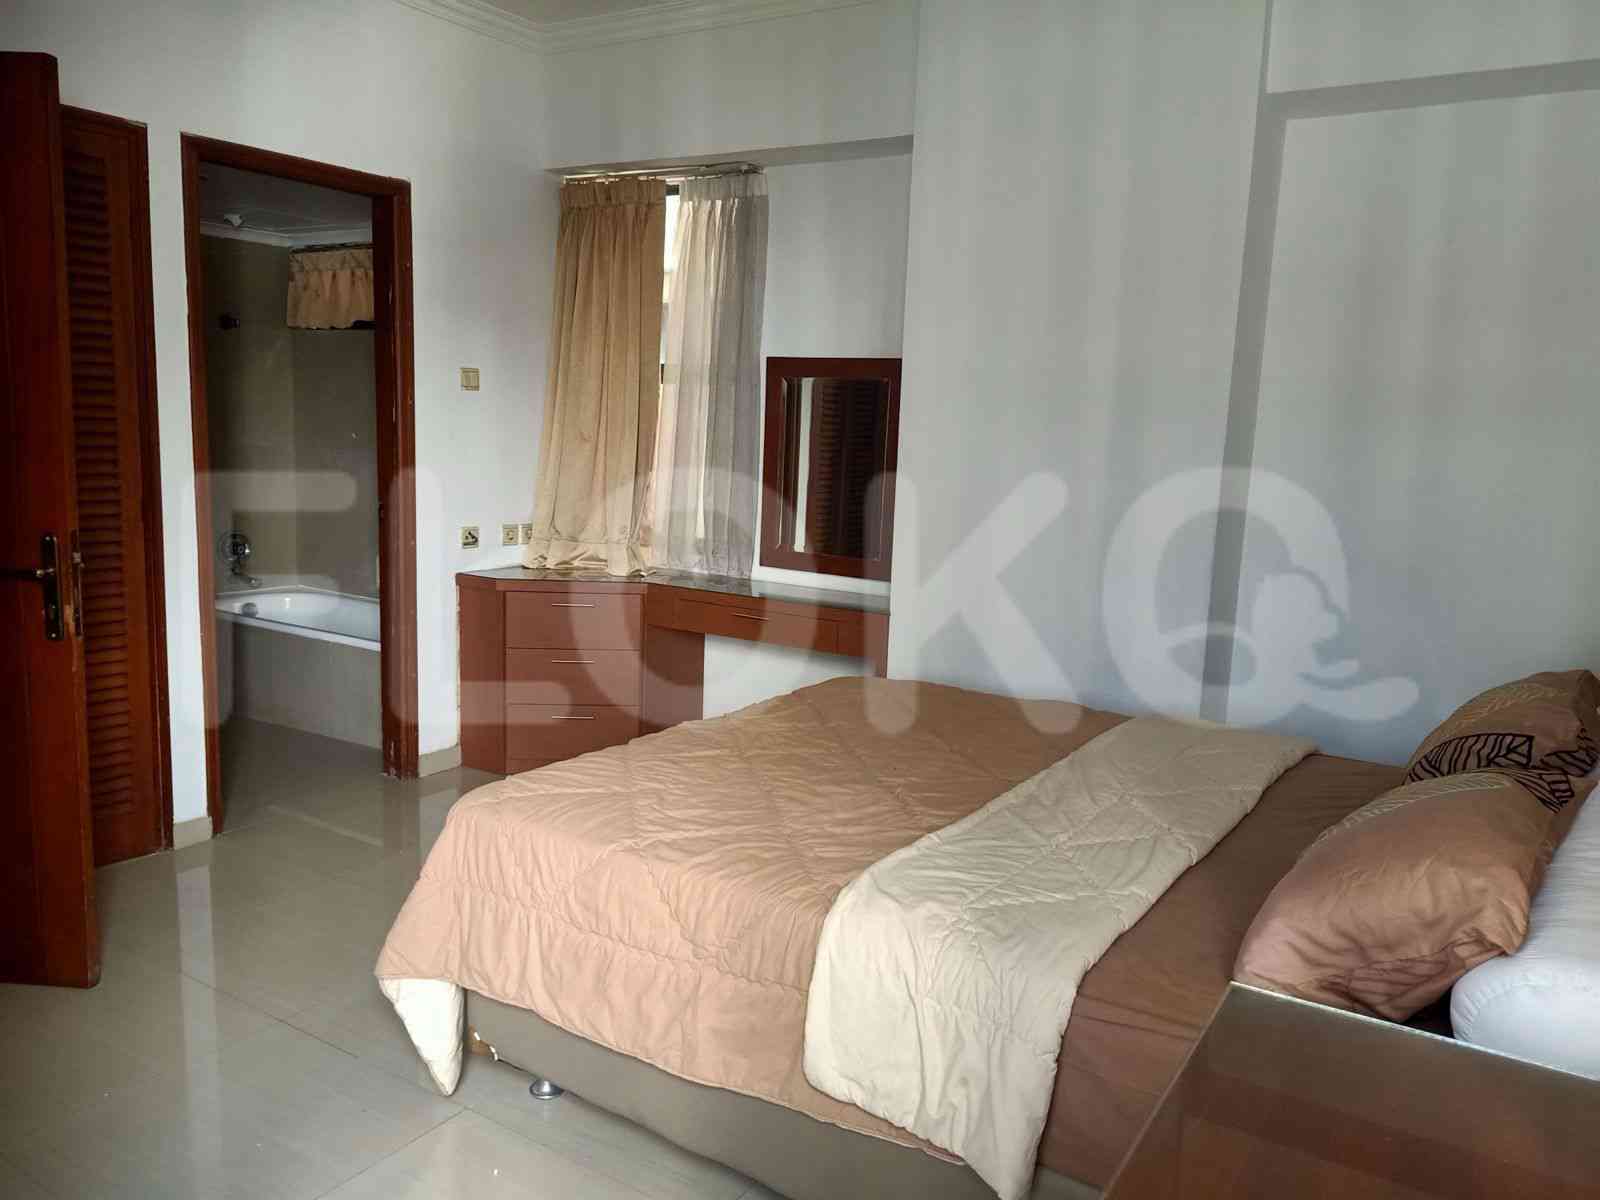 3 Bedroom on 16th Floor for Rent in Aryaduta Suites Semanggi - fsudbb 3